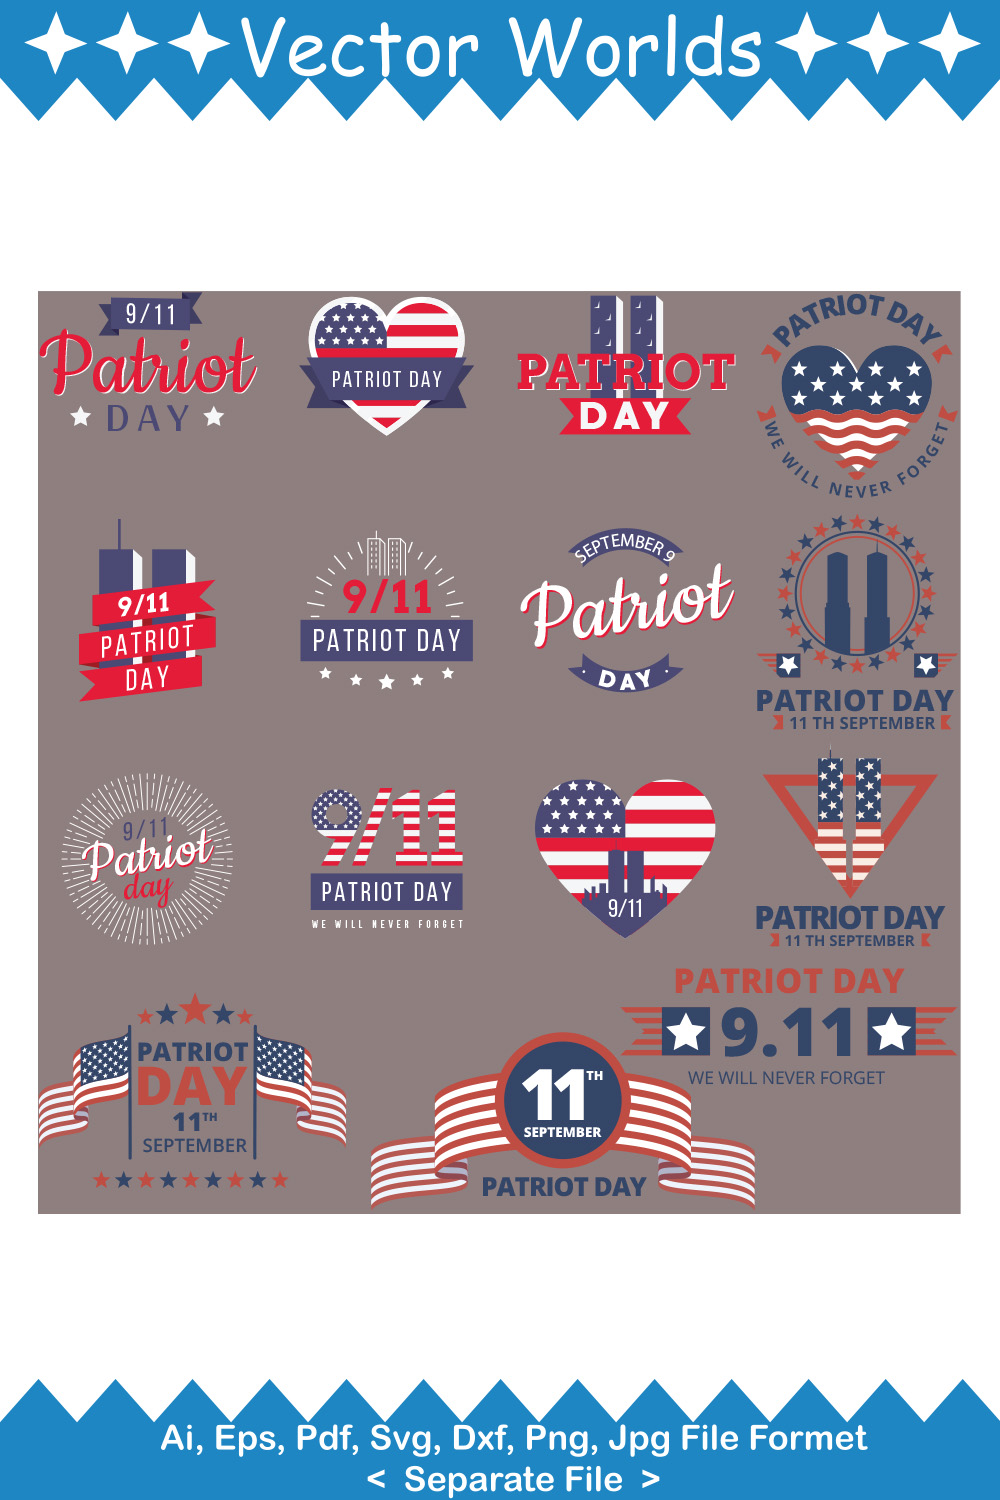 Happy Patriot Day SVG Vector Design pinterest preview image.